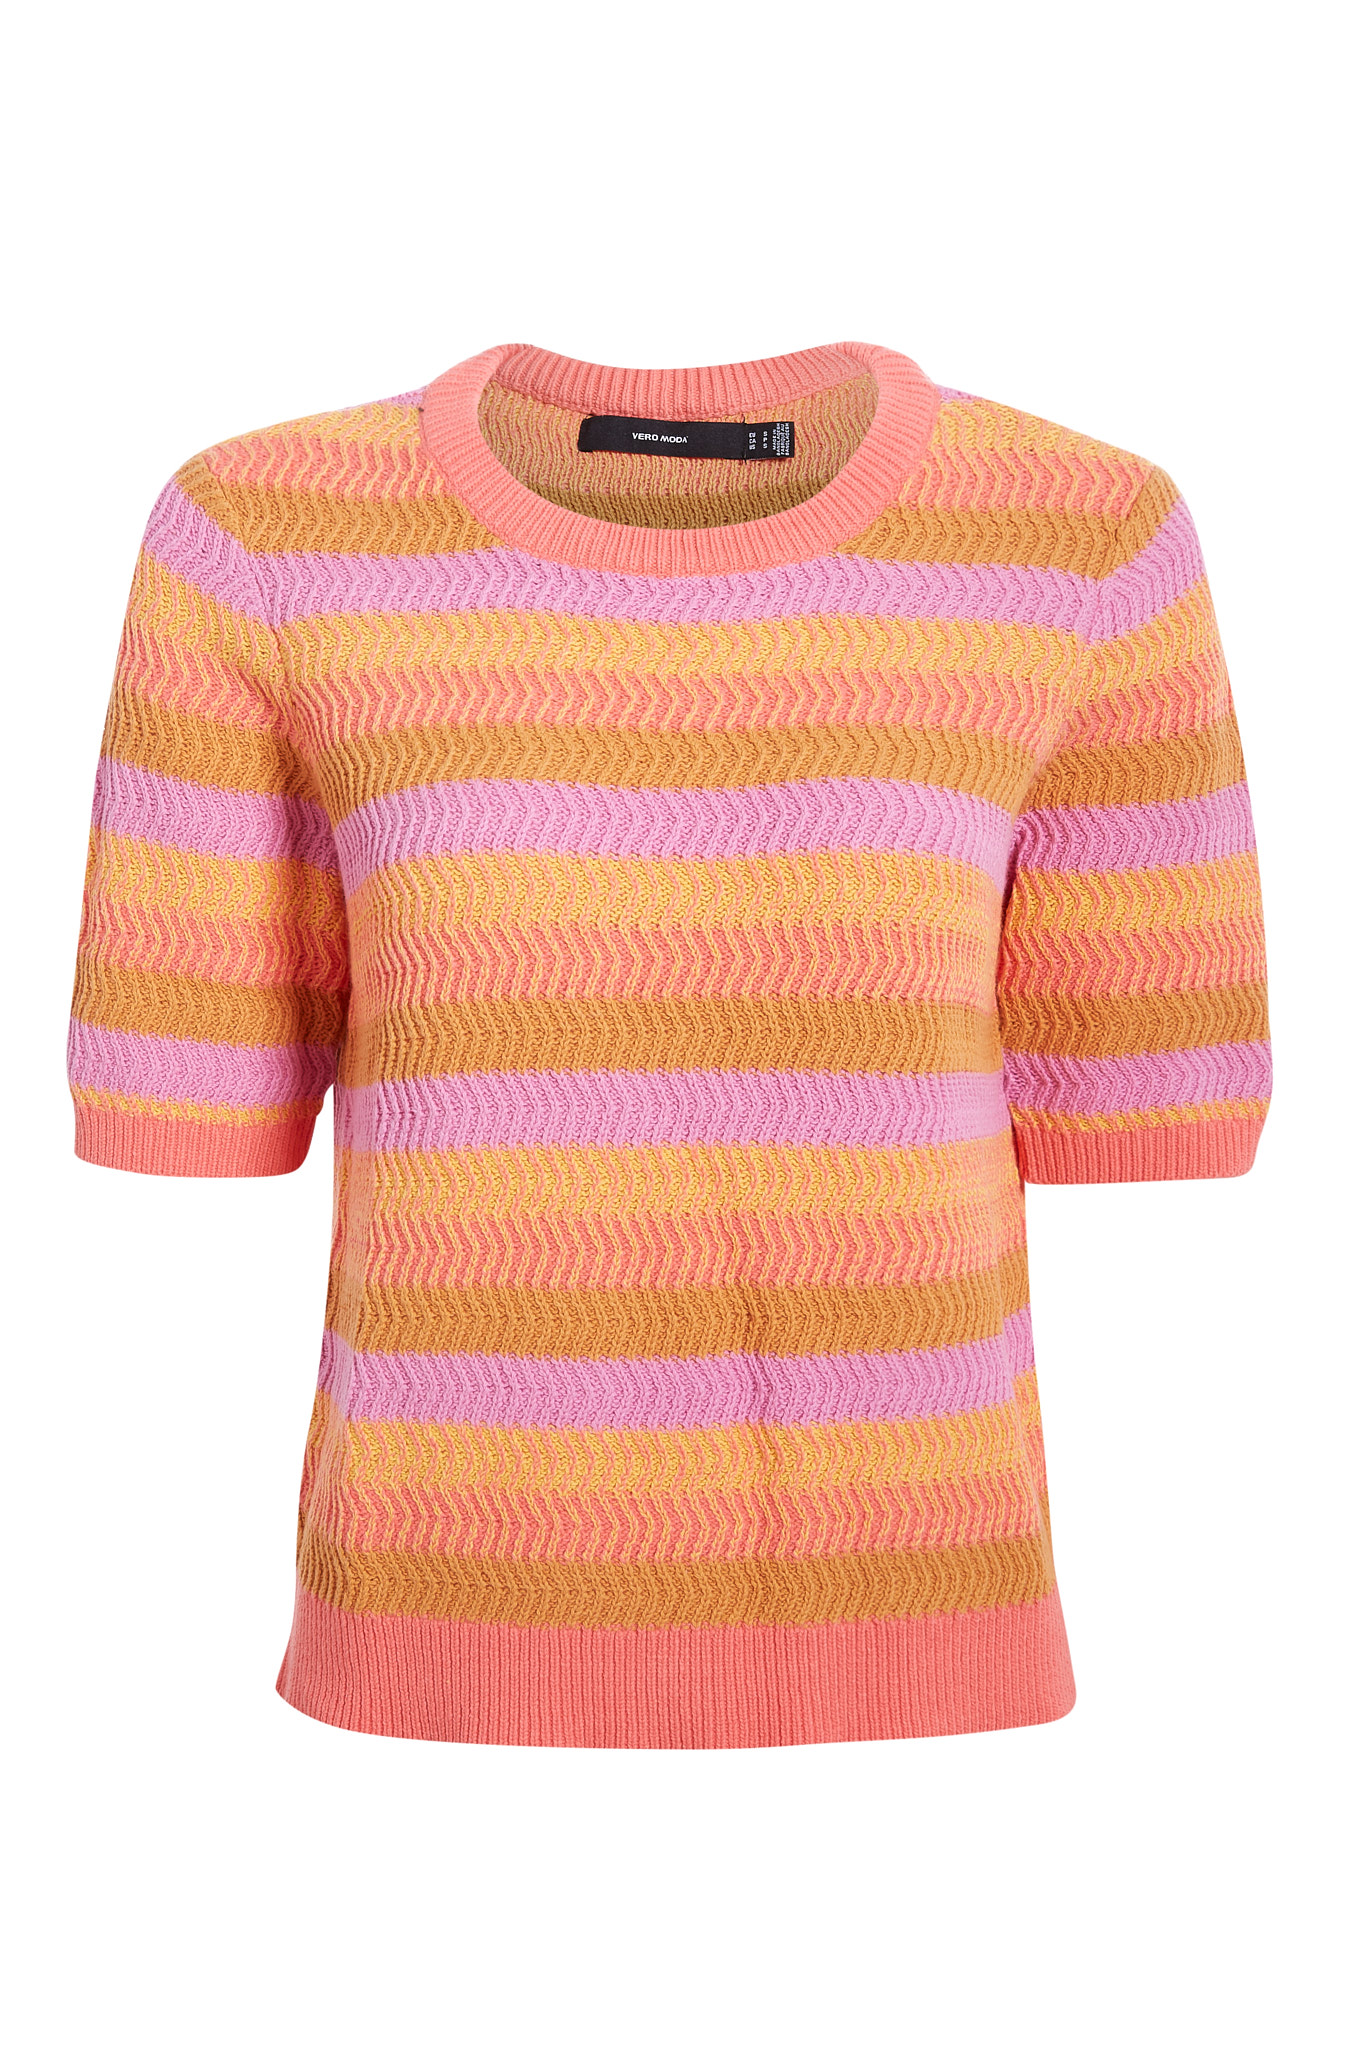 Vero Moda Stripe Knit Pullover in Multi S | DAILYLOOK